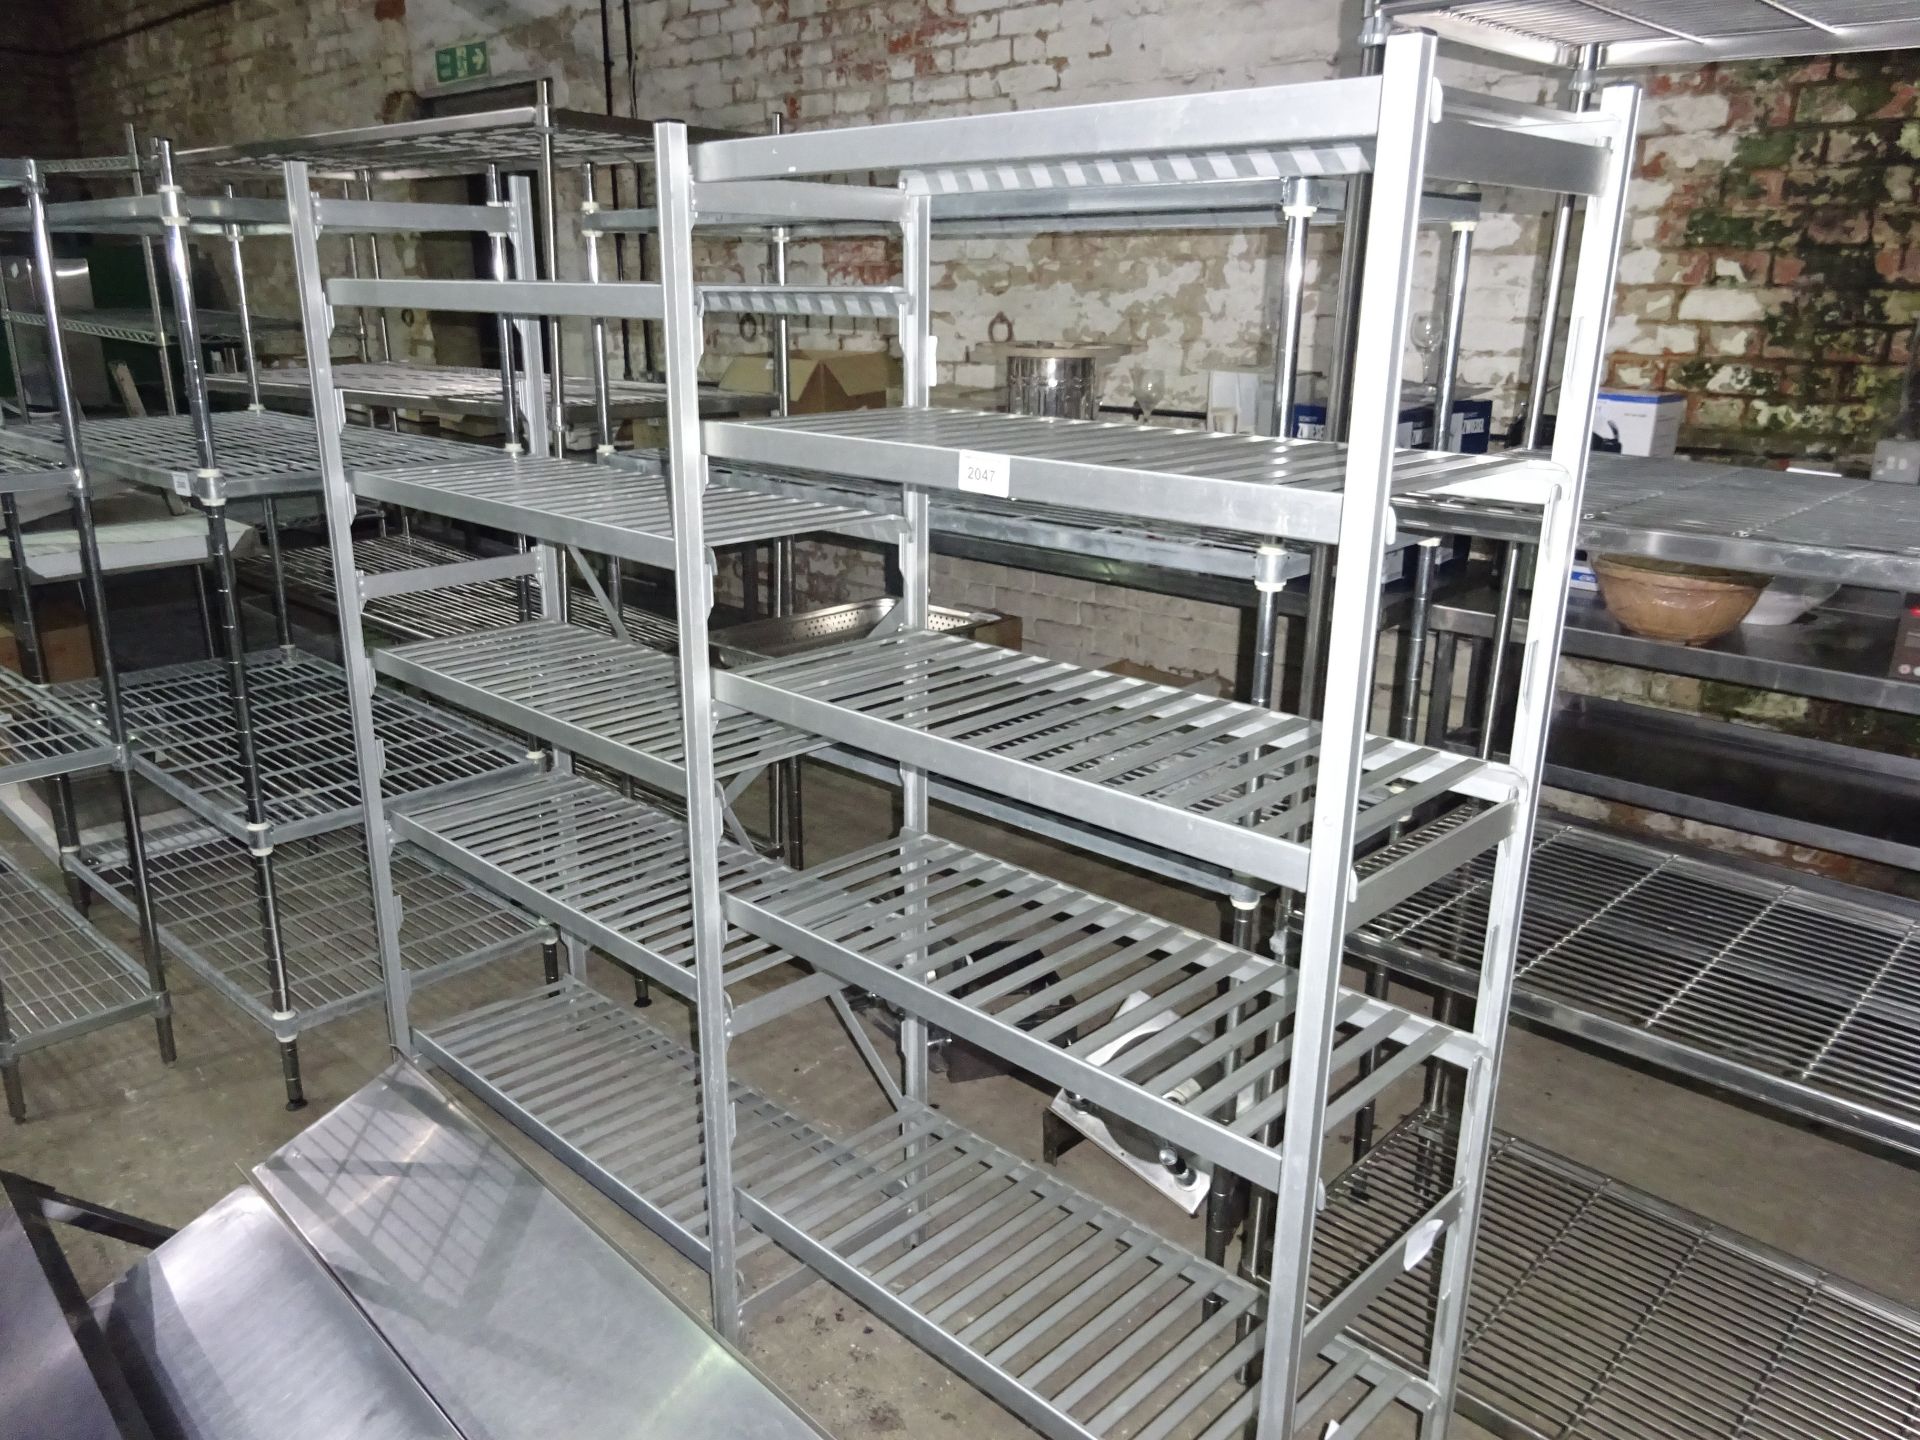 Twin bay aluminium 10 shelf unit, width 187cms, depth 40cms and height 168cms.